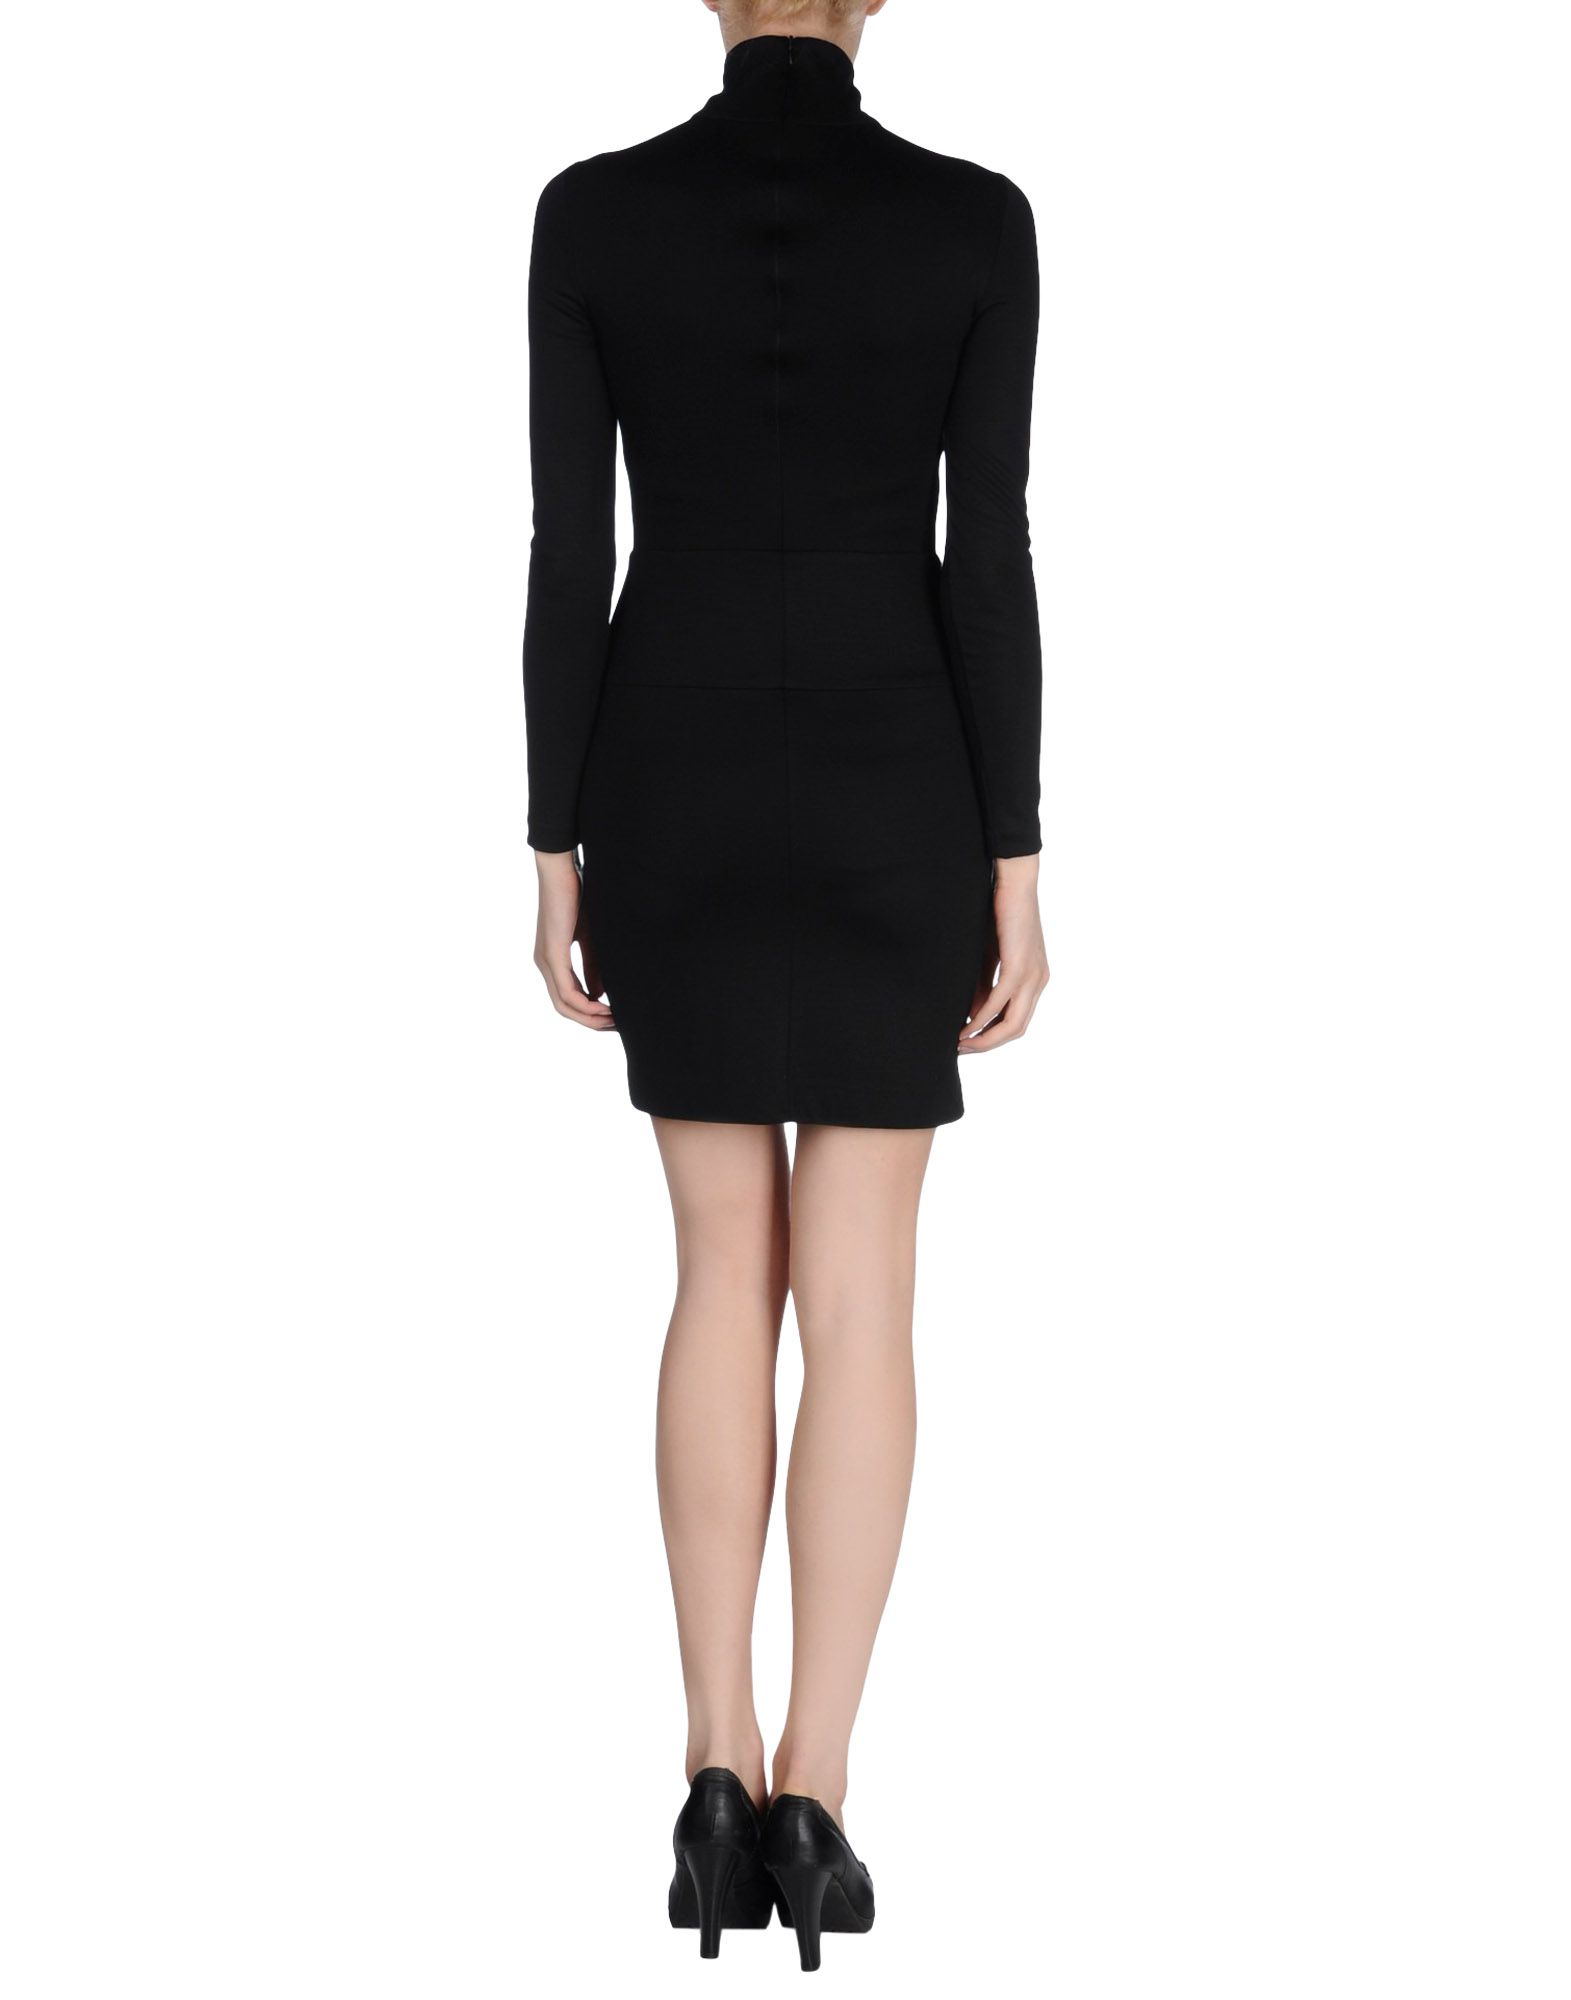 Lyst - Ferragamo Short Dress in Black